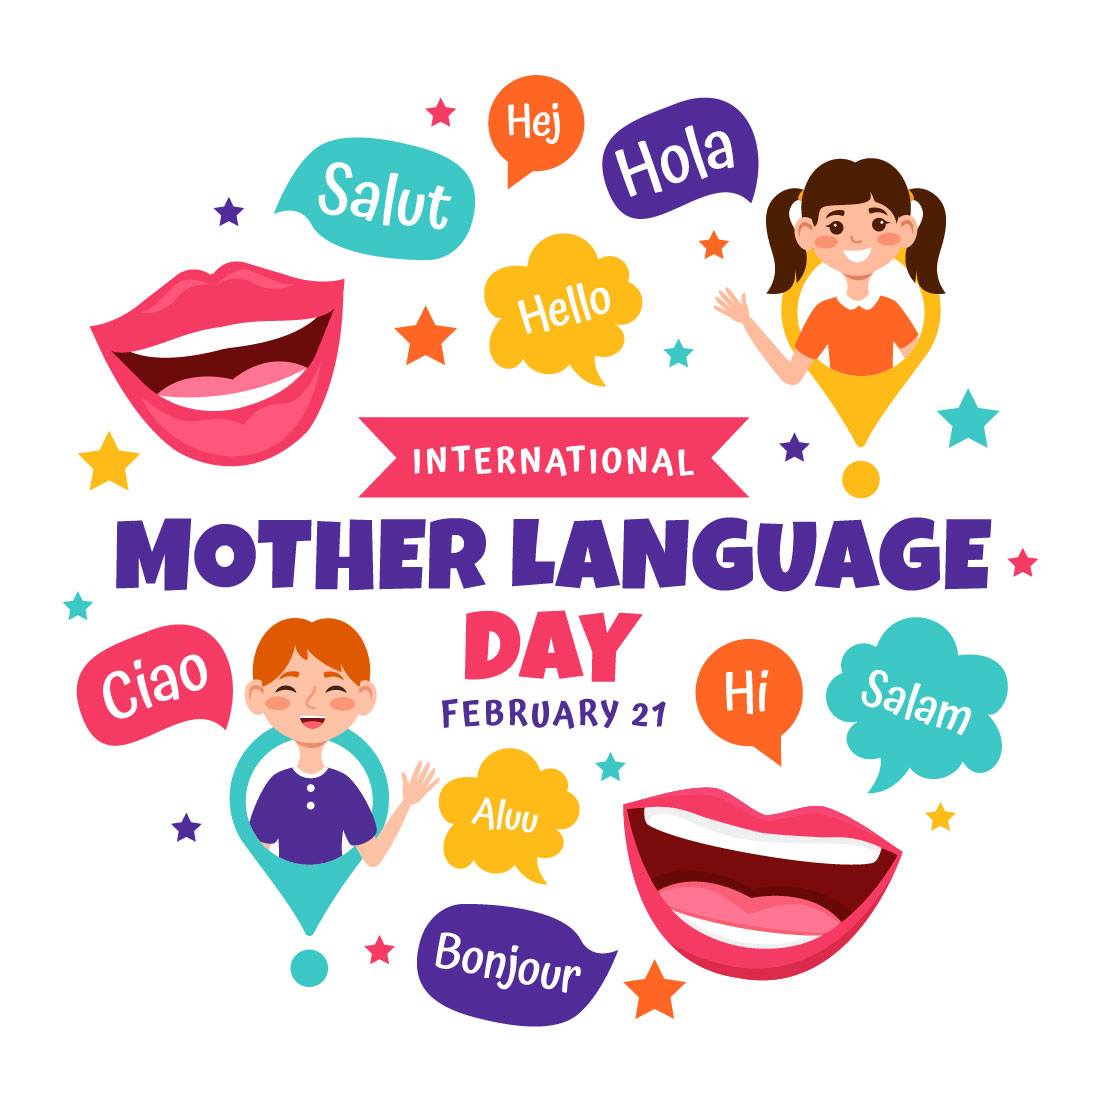 12 International Mother Language Day Illustration cover image.